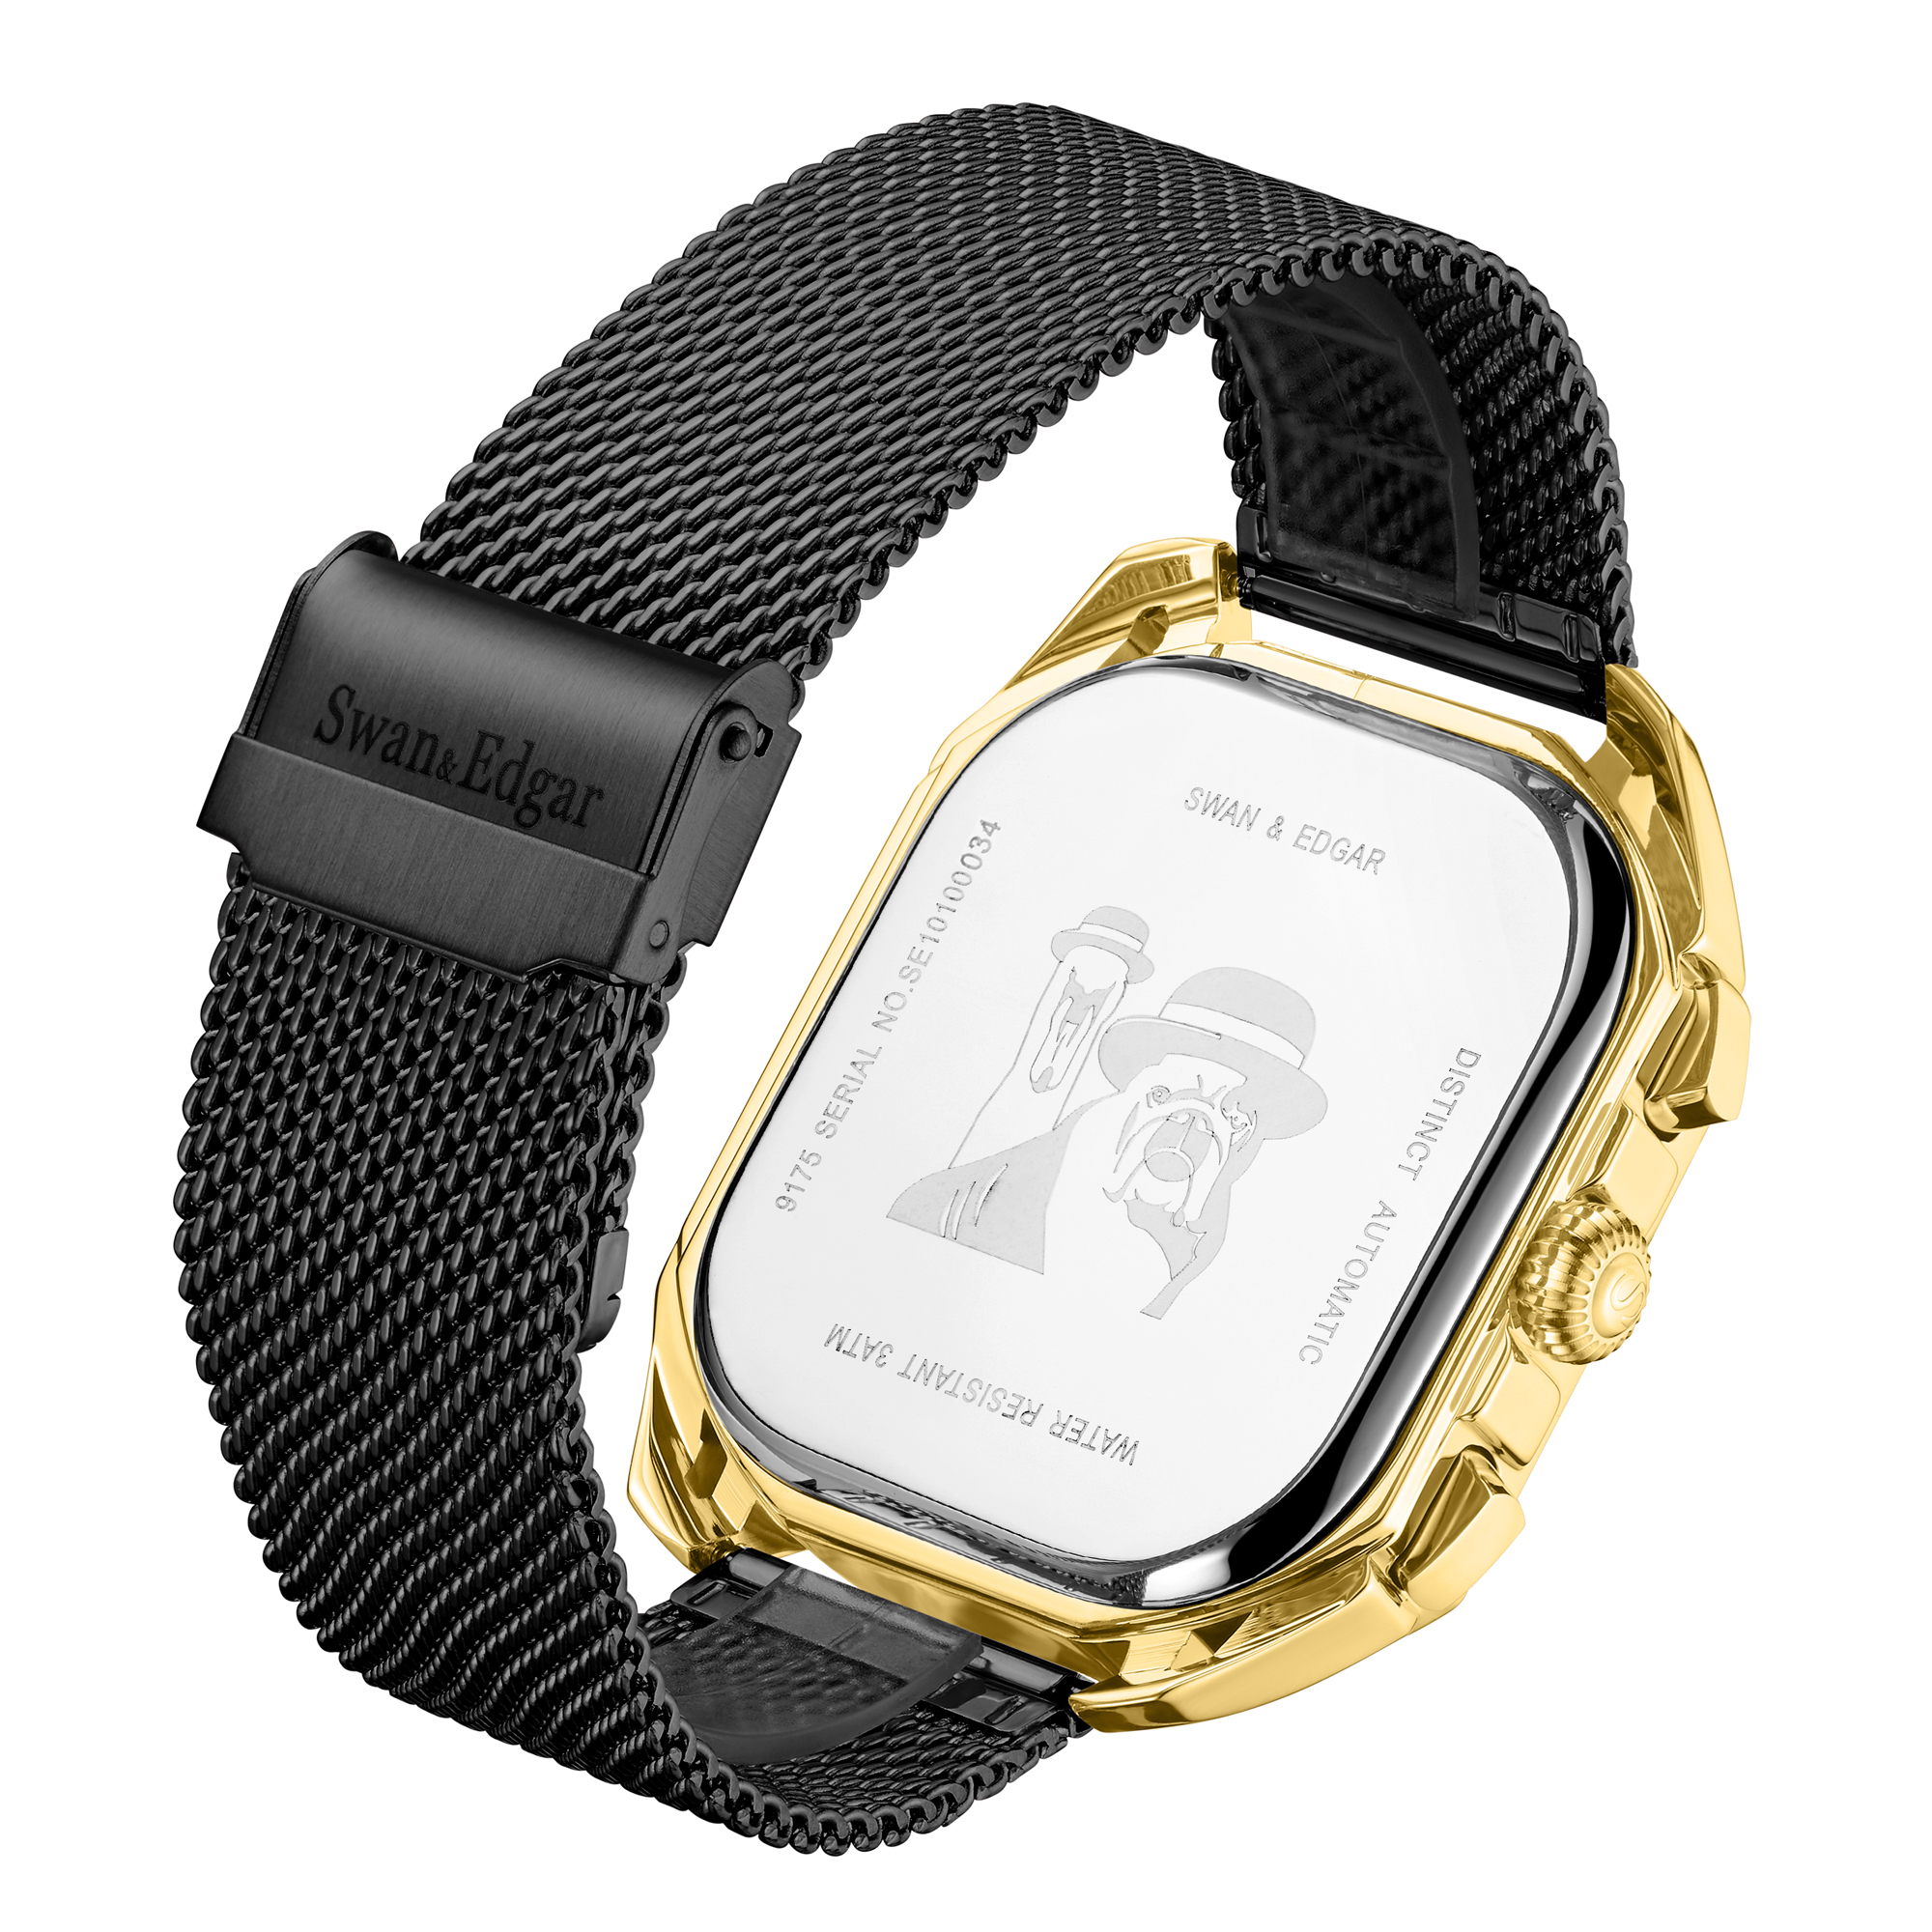 Swan & Edgar Hand Assembled Distinct Automatic Gold Watch - Free Delivery & 5 Year Warranty - Bild 5 aus 5